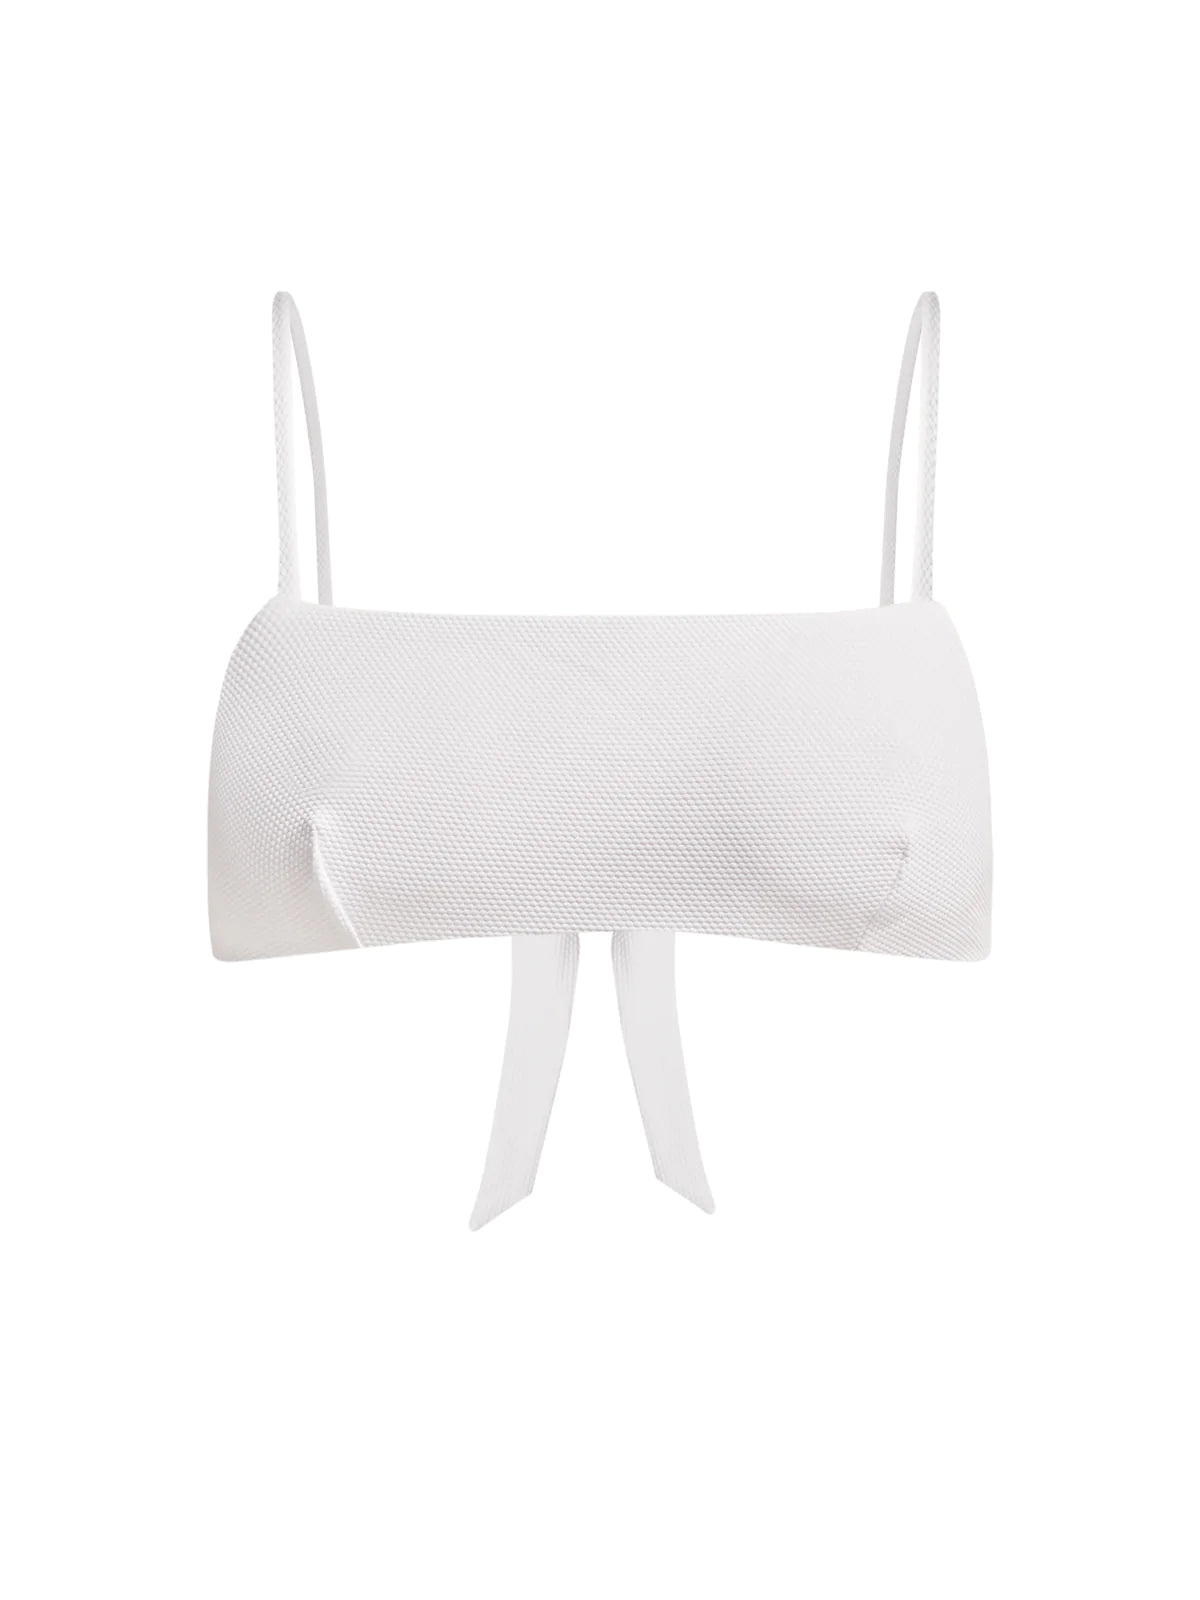 Ana white bikini top - Collagerie